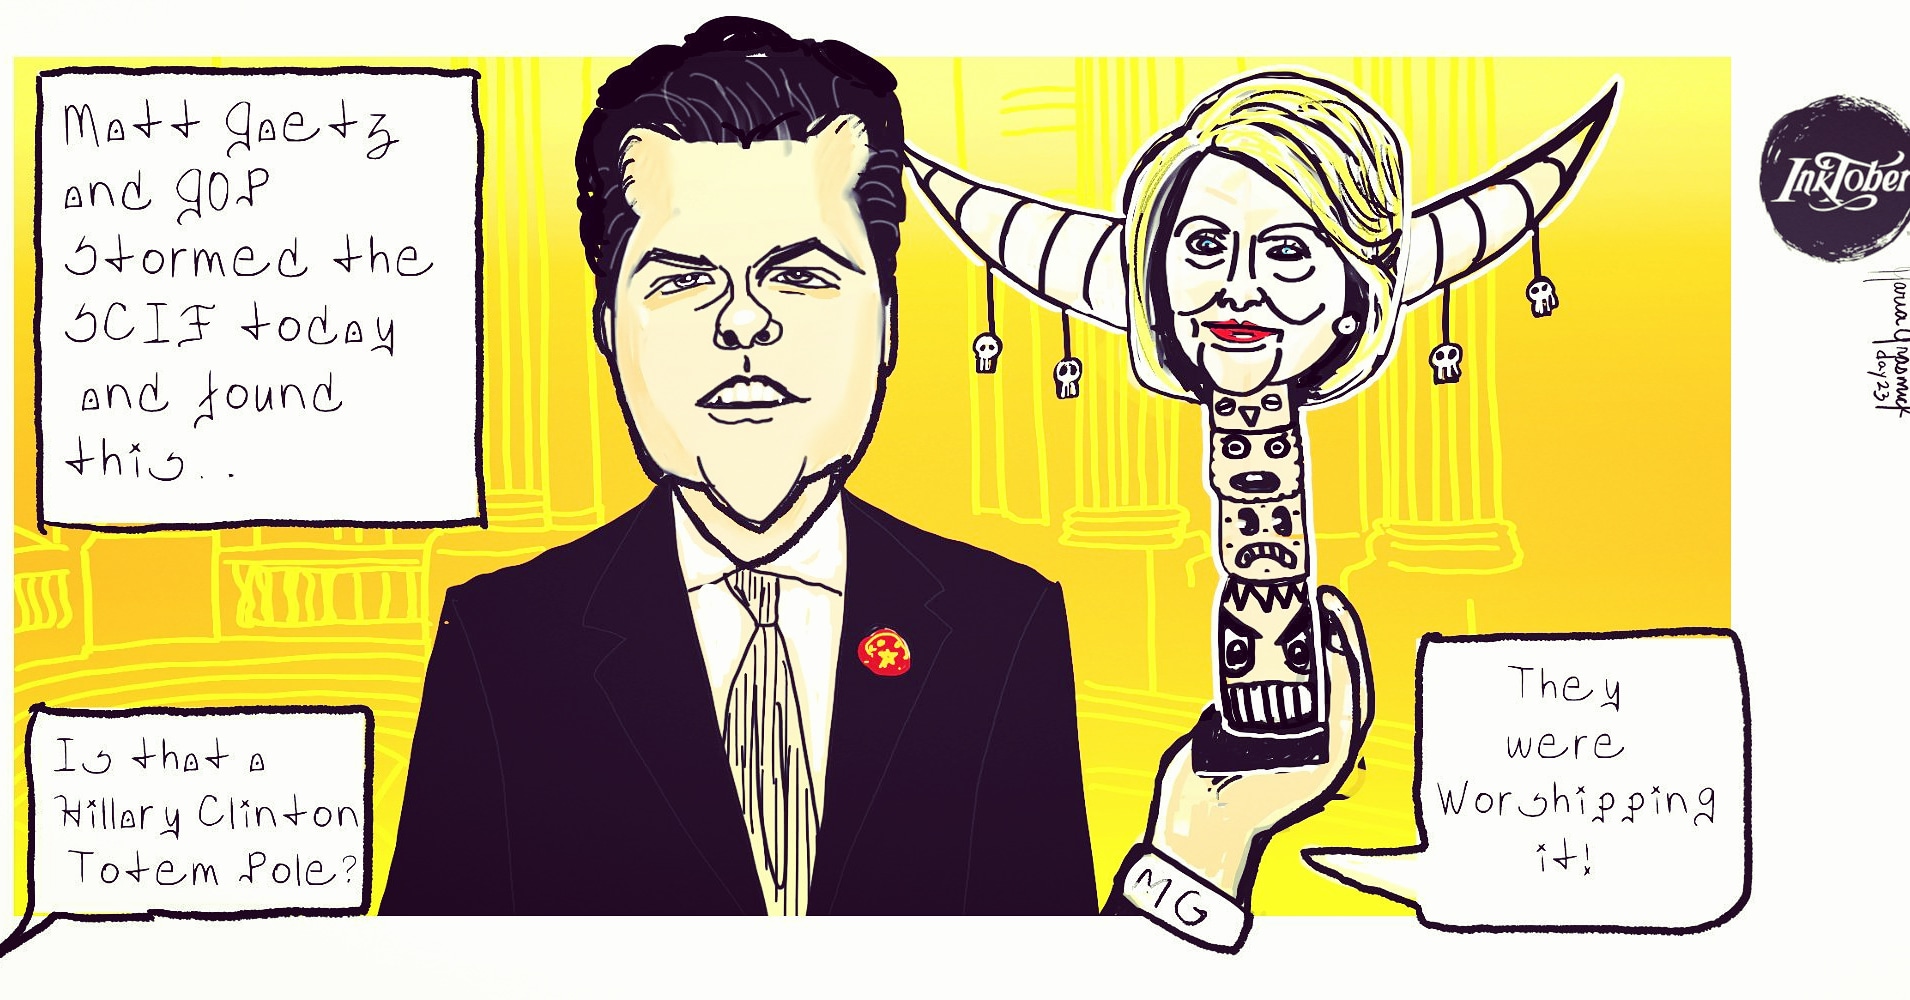 Matt Gaetz Donald Trump Hillary Clinton political cartoon scif impeachment hearings inktober ancient post thumbnail image